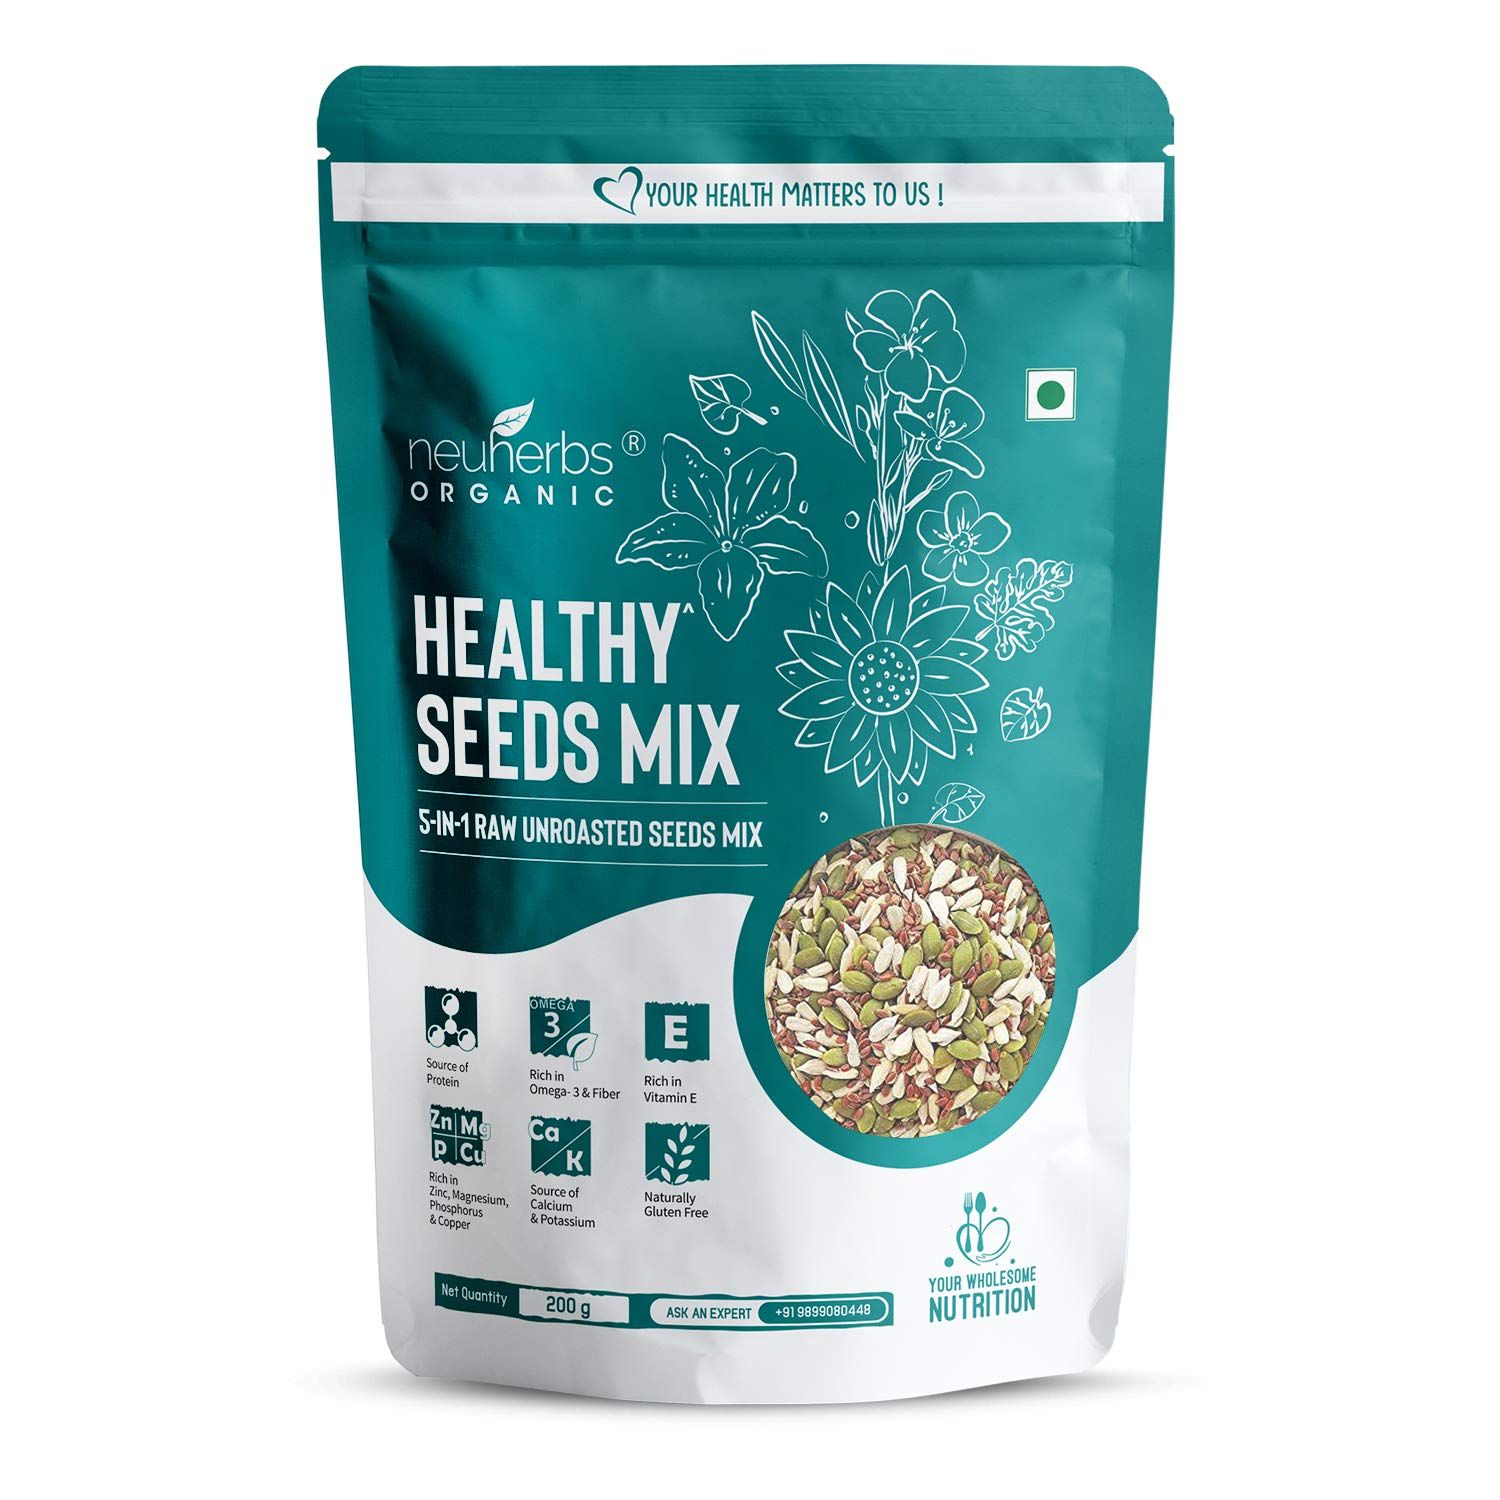 Neuherbs Healthy Seeds Mix Image